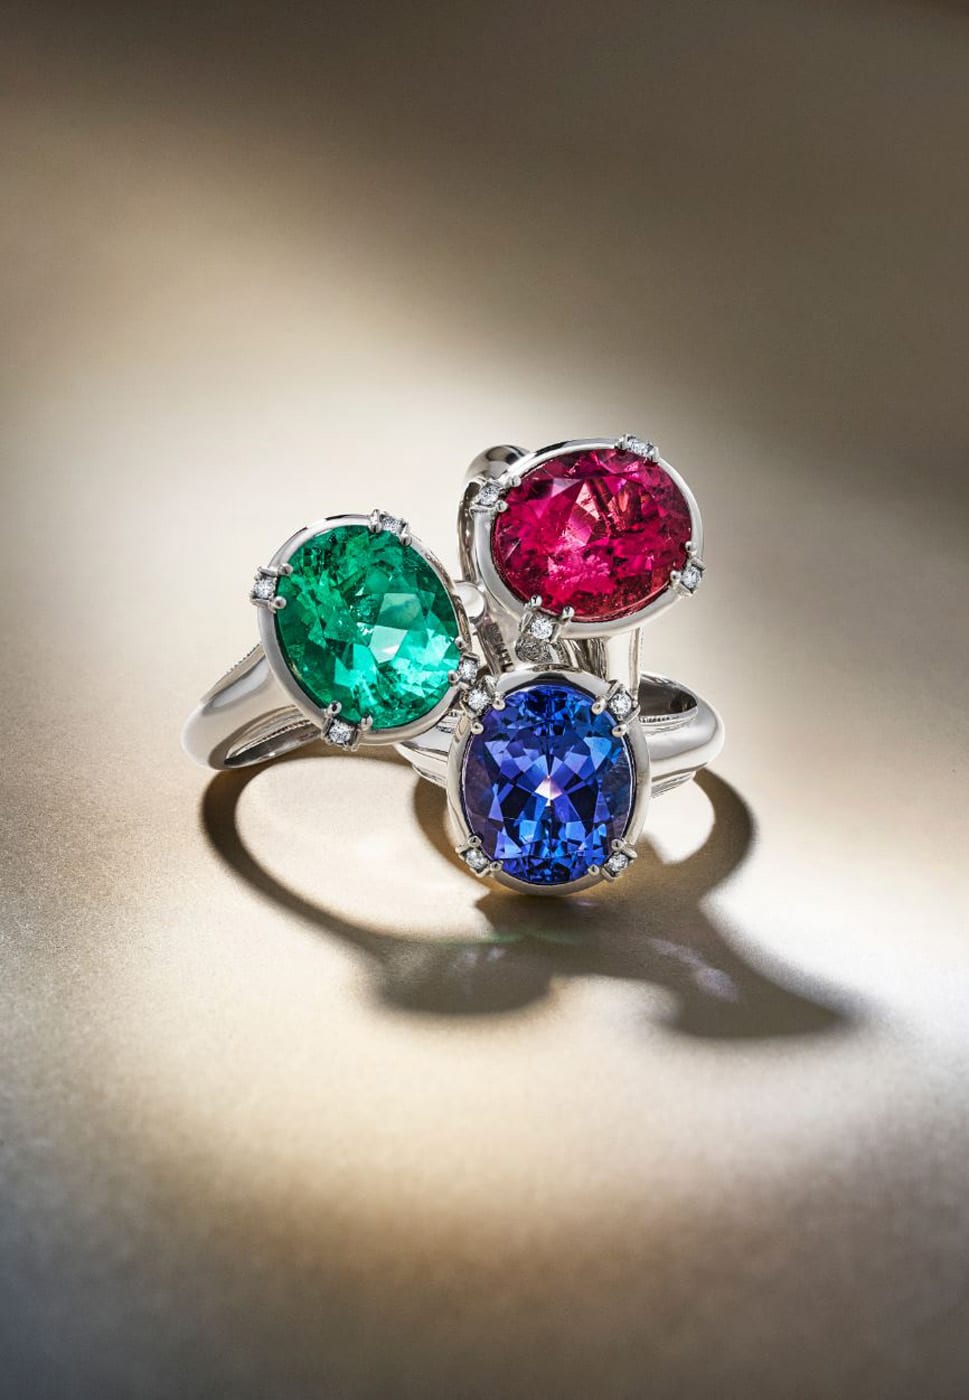 New Bentley Jewelry Collection Features Brilliant Array of Gemstones